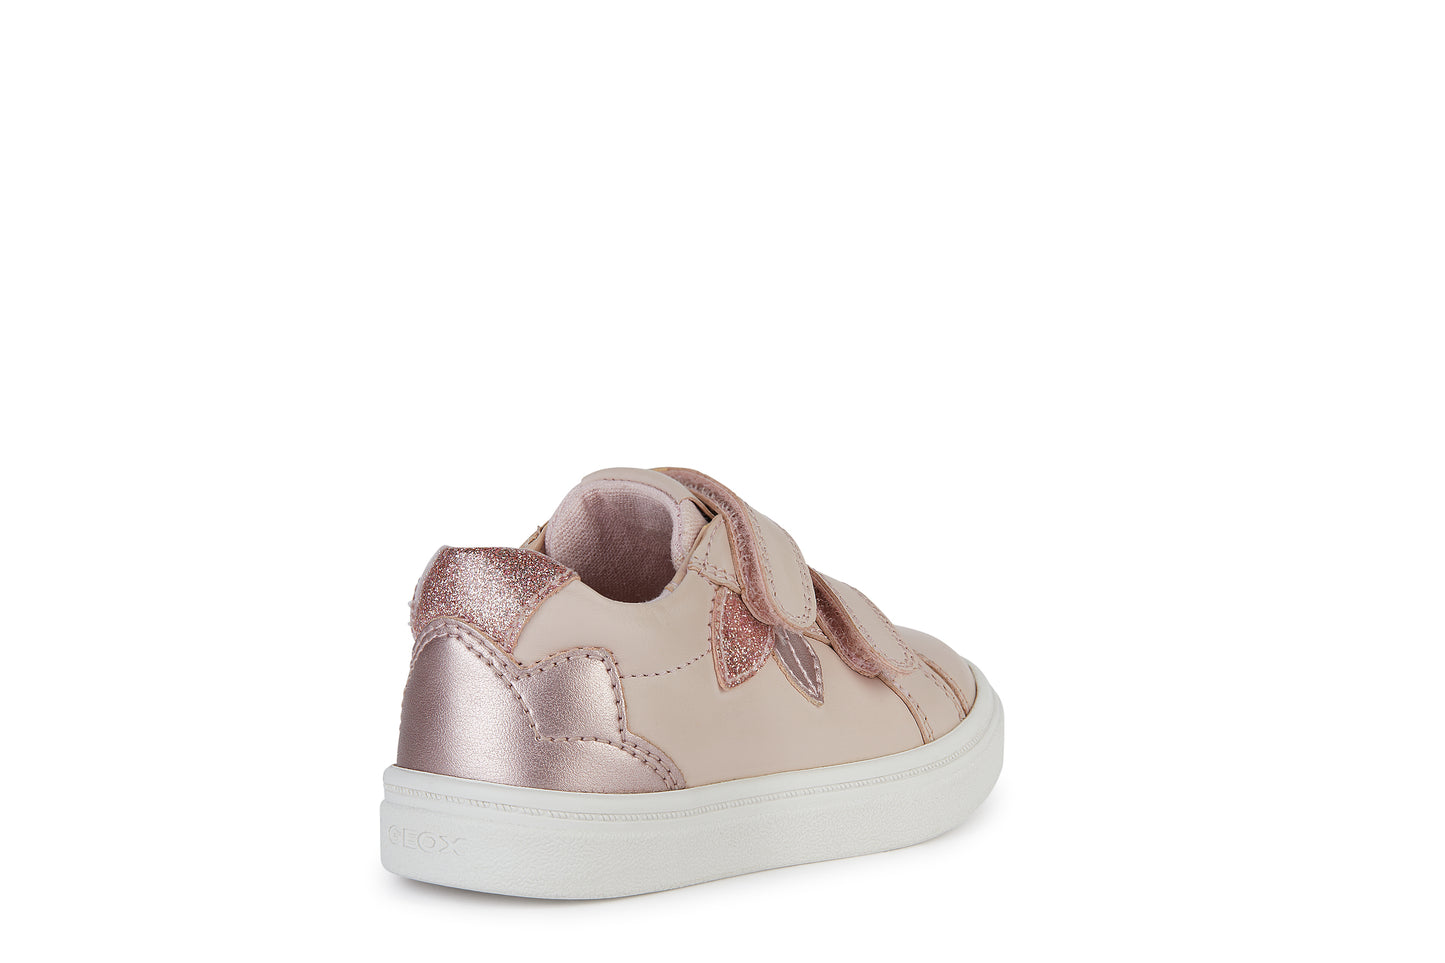 Baby Nashik Girl’s First Shoe in Rose Pearl